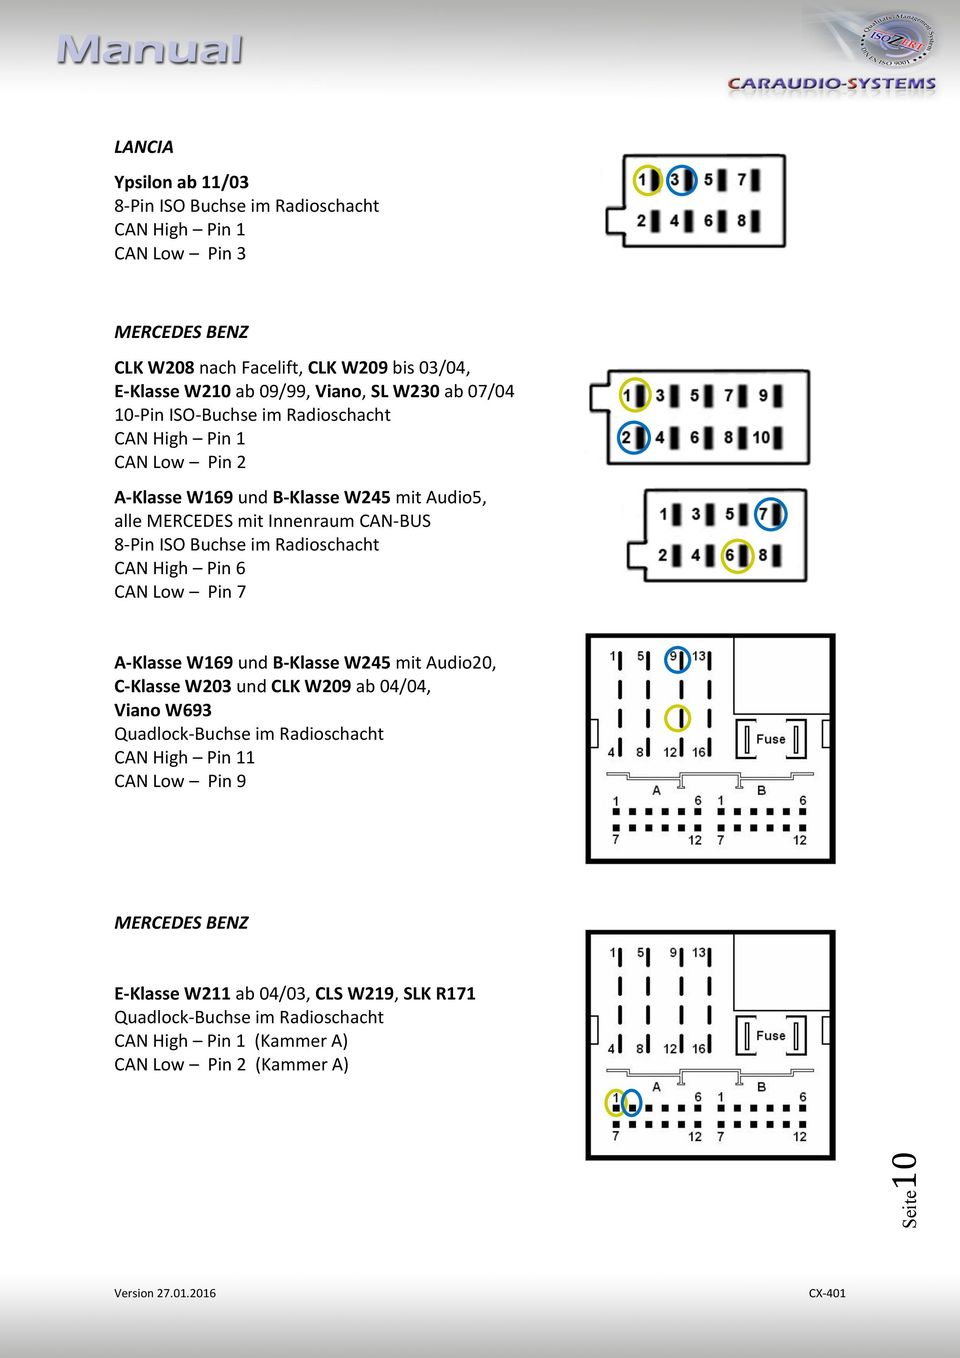 Innenraum CAN-BUS 8-Pin ISO Buchse im Radioschacht CAN High Pin 6 CAN Low Pin 7 A-Klasse W169 und B-Klasse W245 mit Audio20, C-Klasse W203 und CLK W209 ab